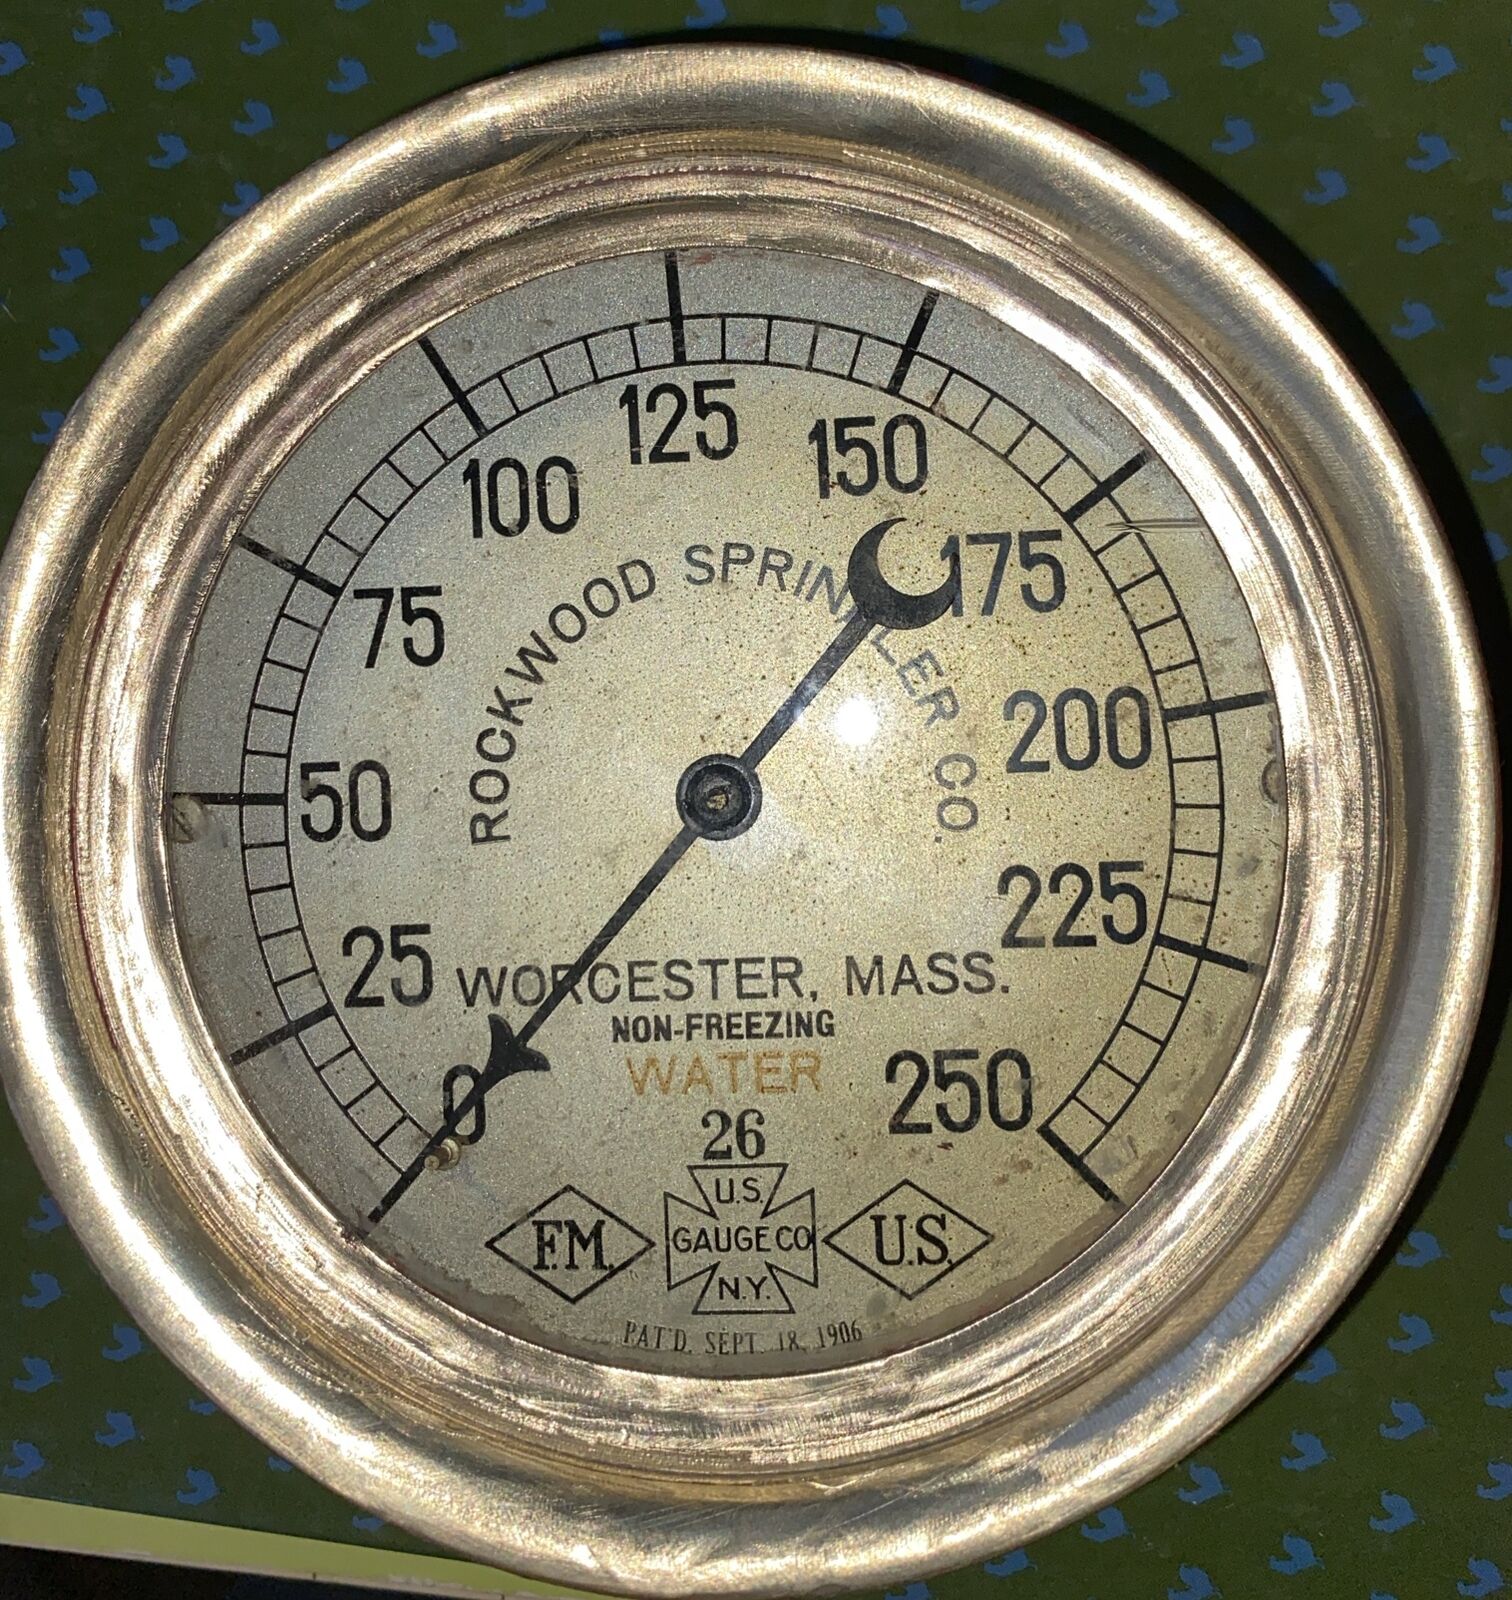 Antique 1910 Brass Pressure Gauge-Chicago Water-Rockwood Sprinkler Co. U.S Gauge